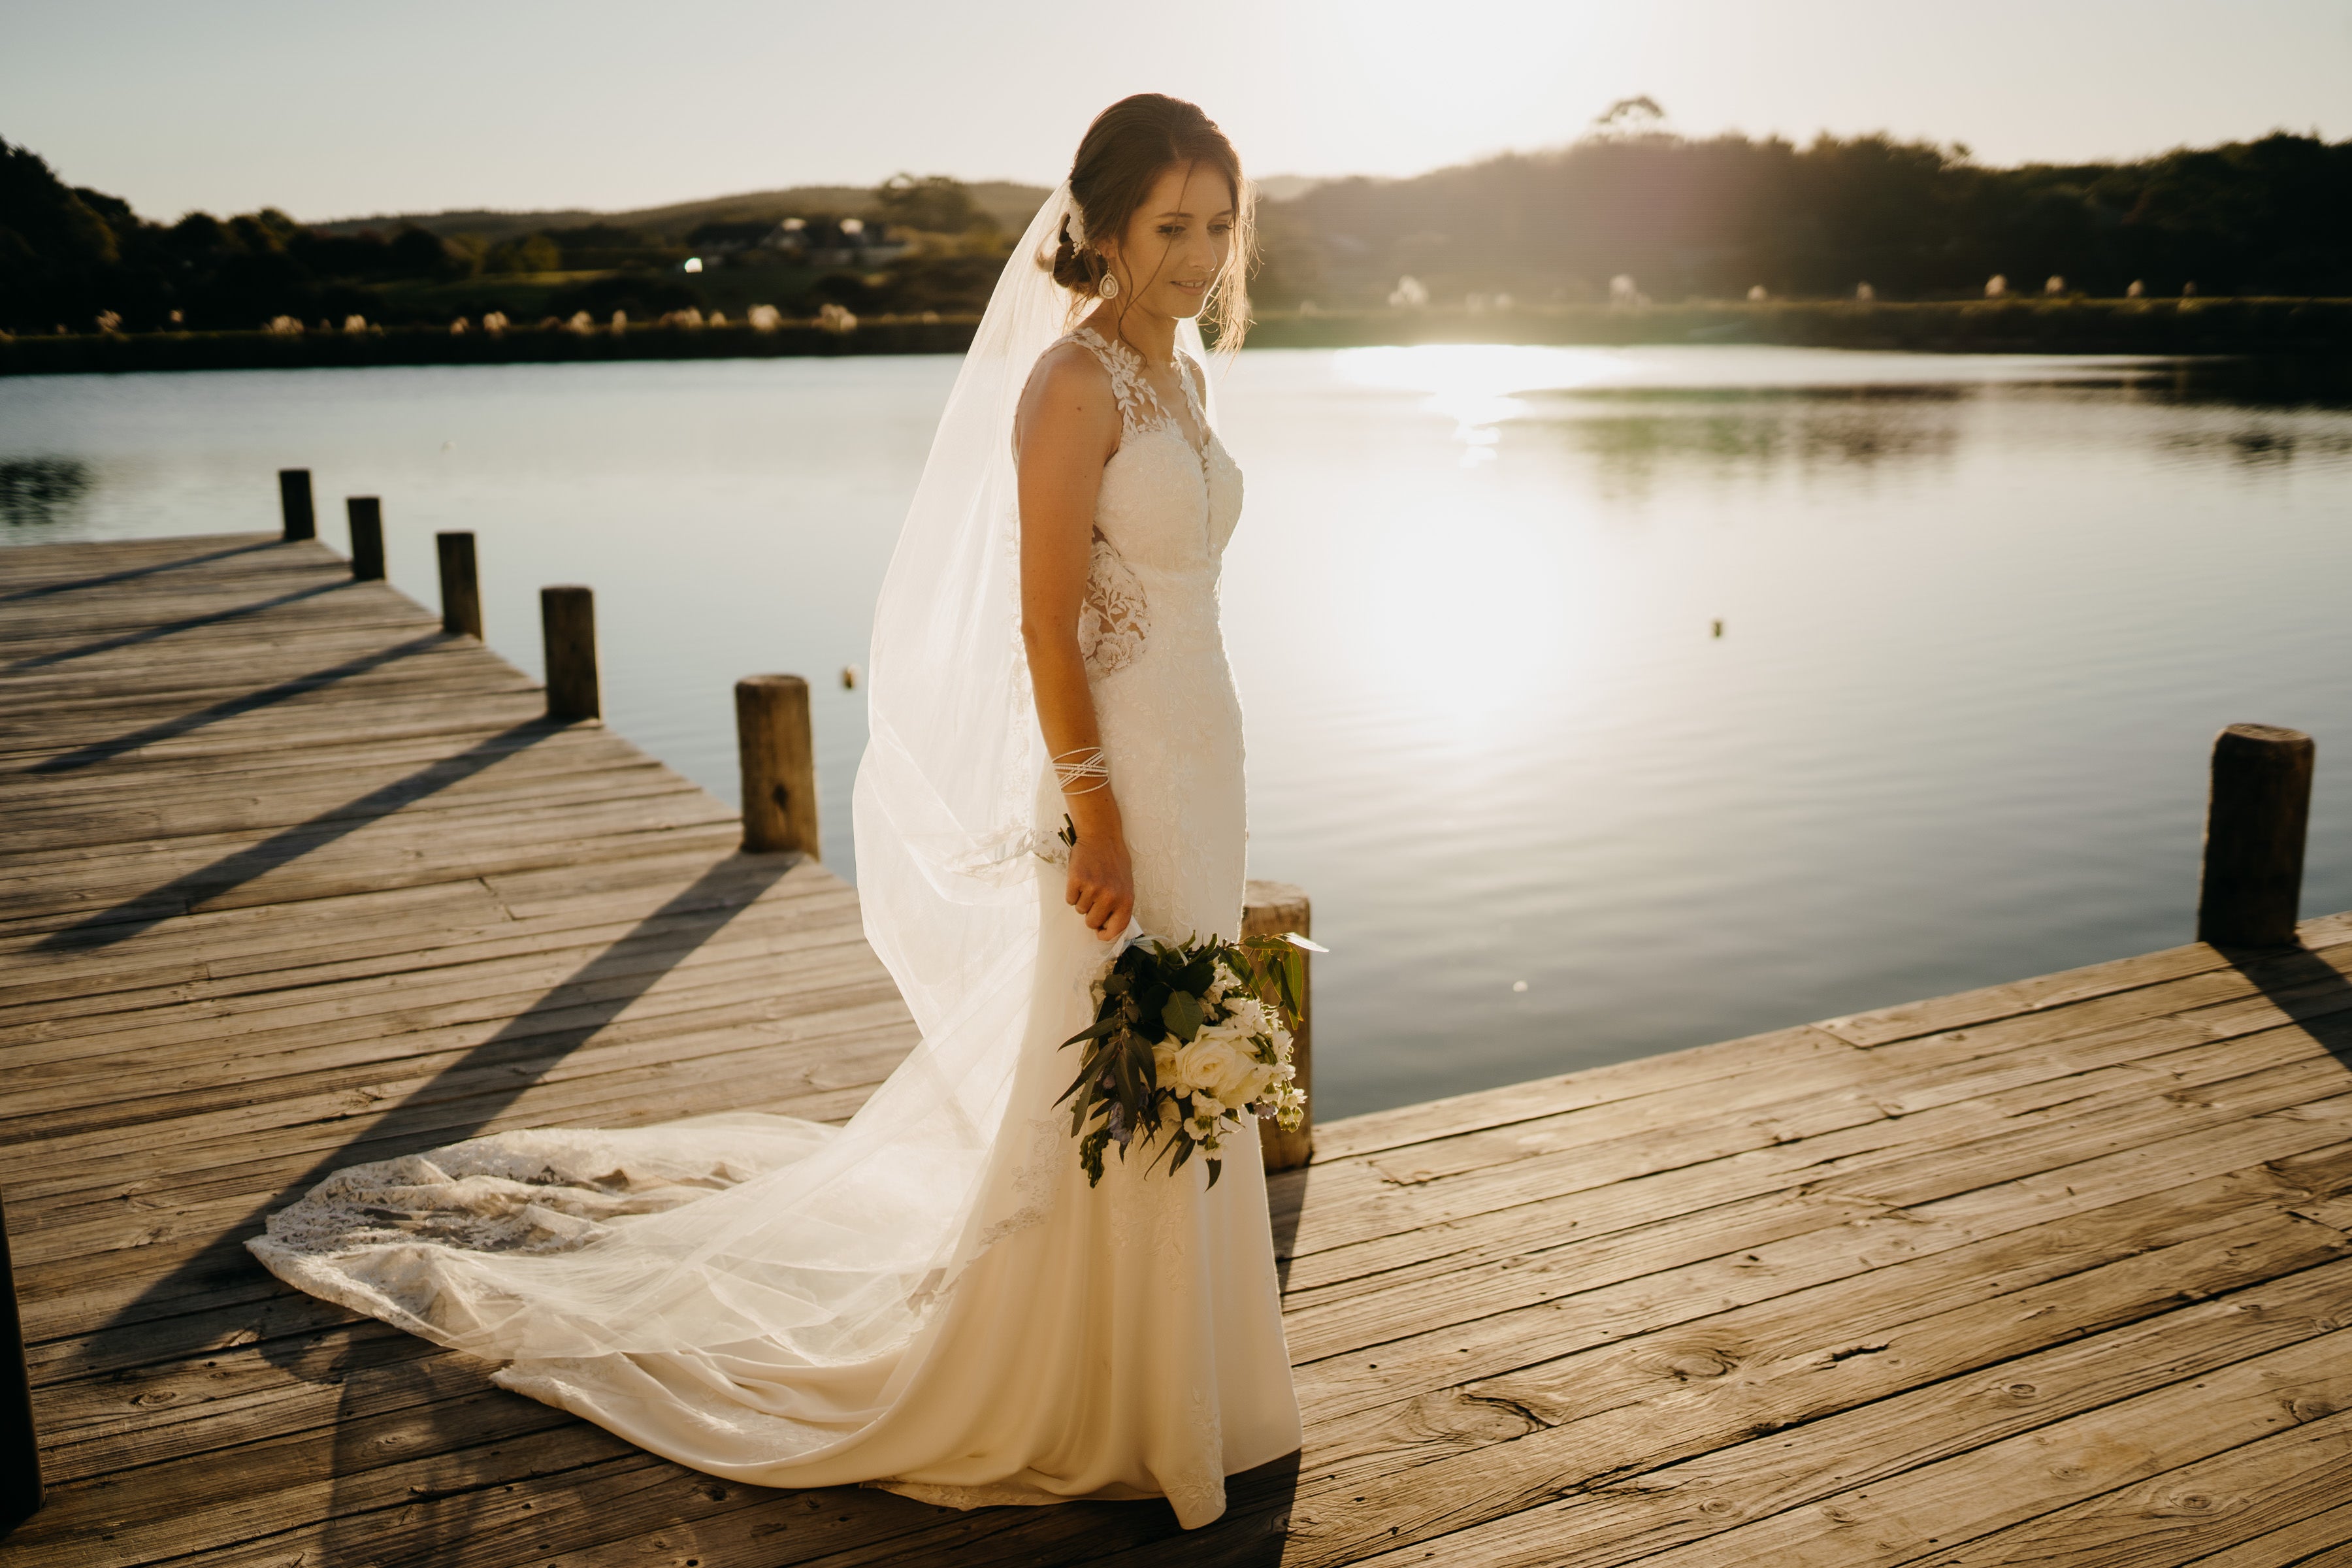 Sarah Wedding Dress on pier | The Boathouse Riverhead | The Paper Gazelle